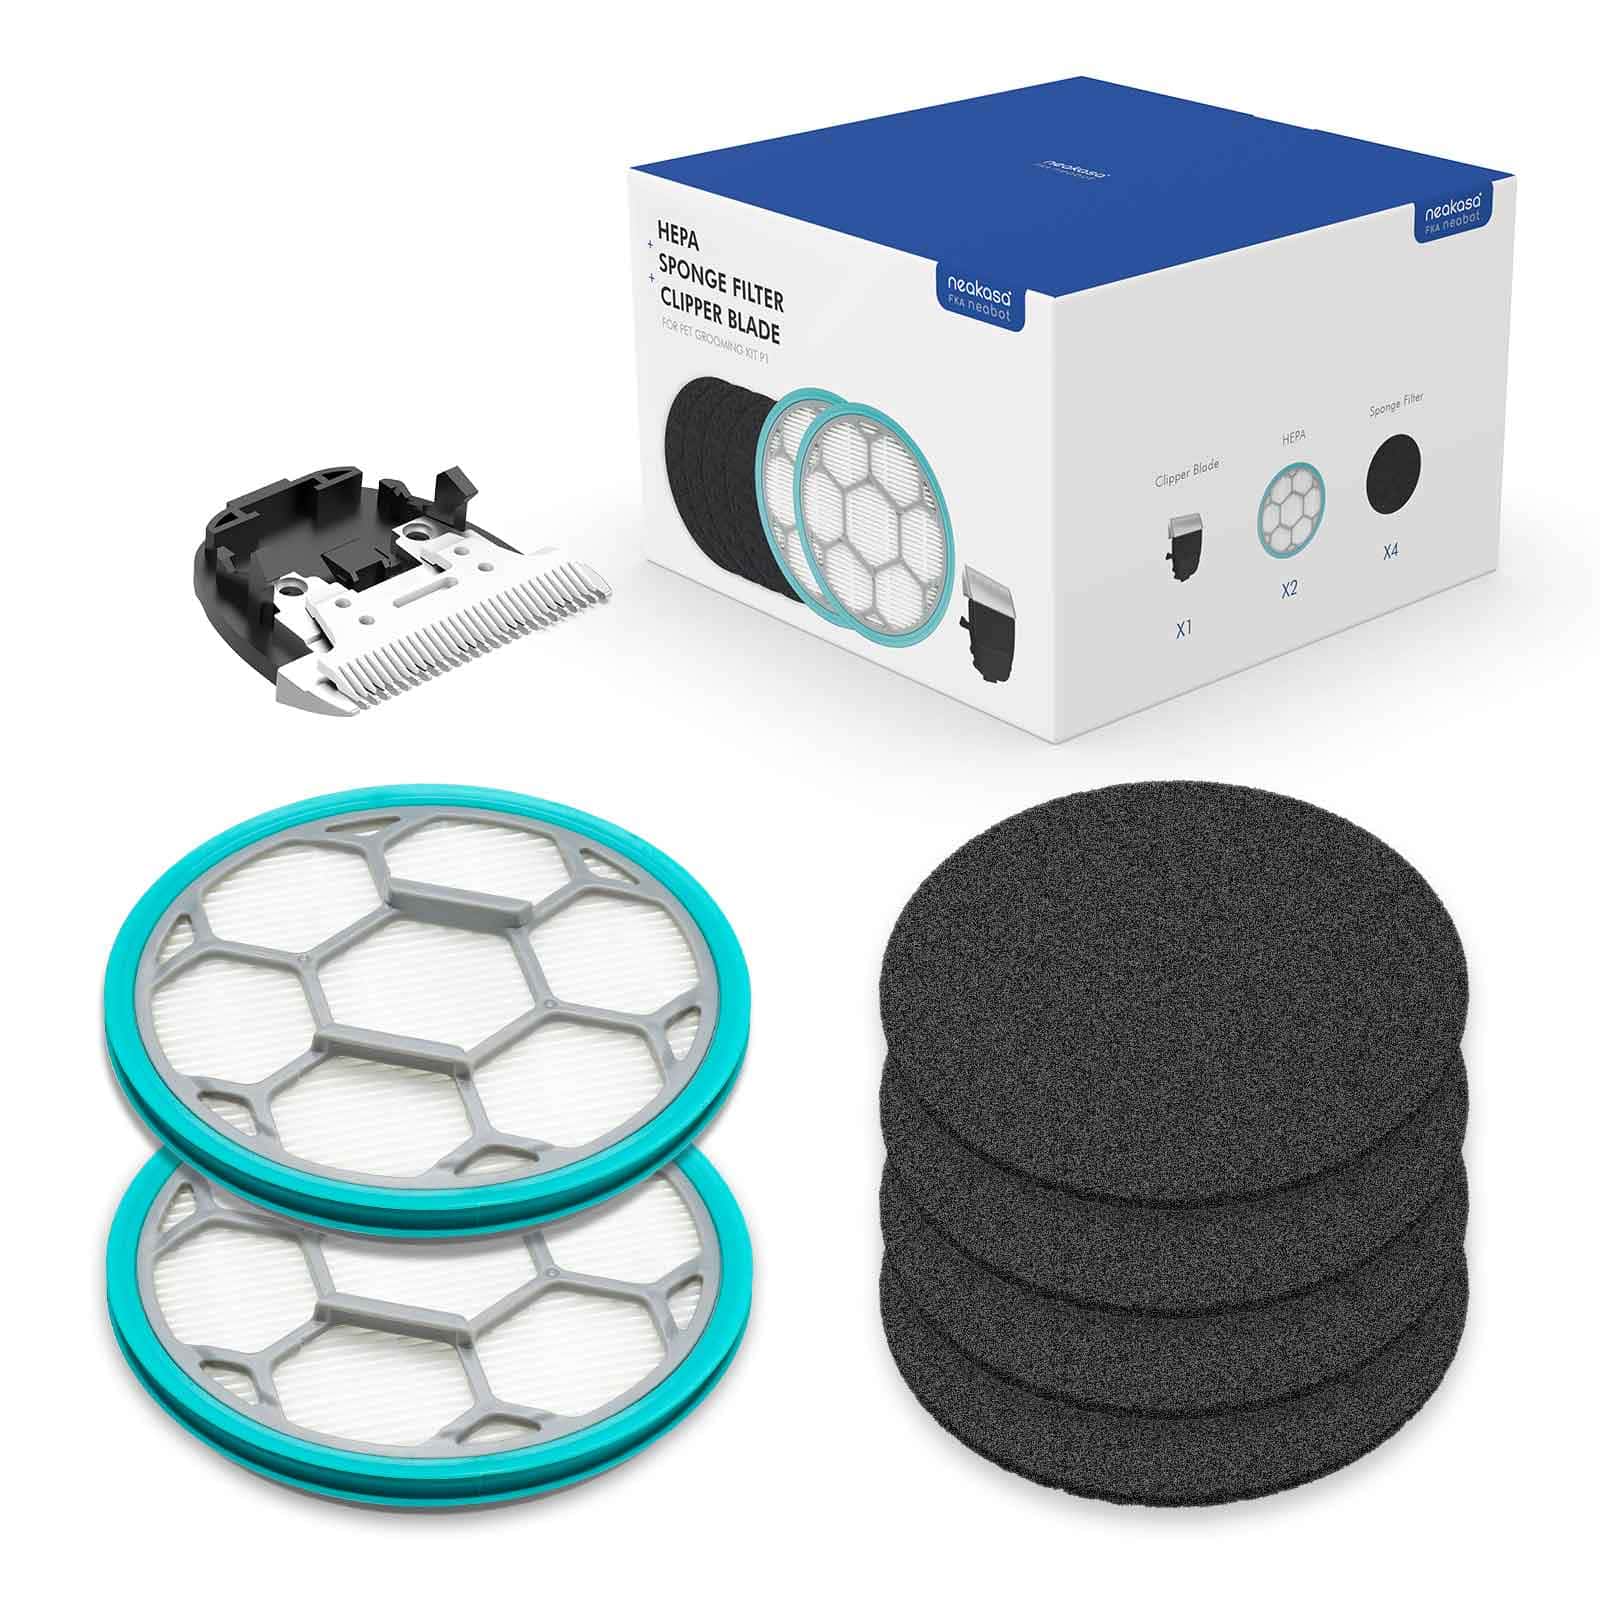 Clipper Blade, Sponge Filter, HEPA for Neakasa P1 Pro Dog Grooming Vacuum Kit